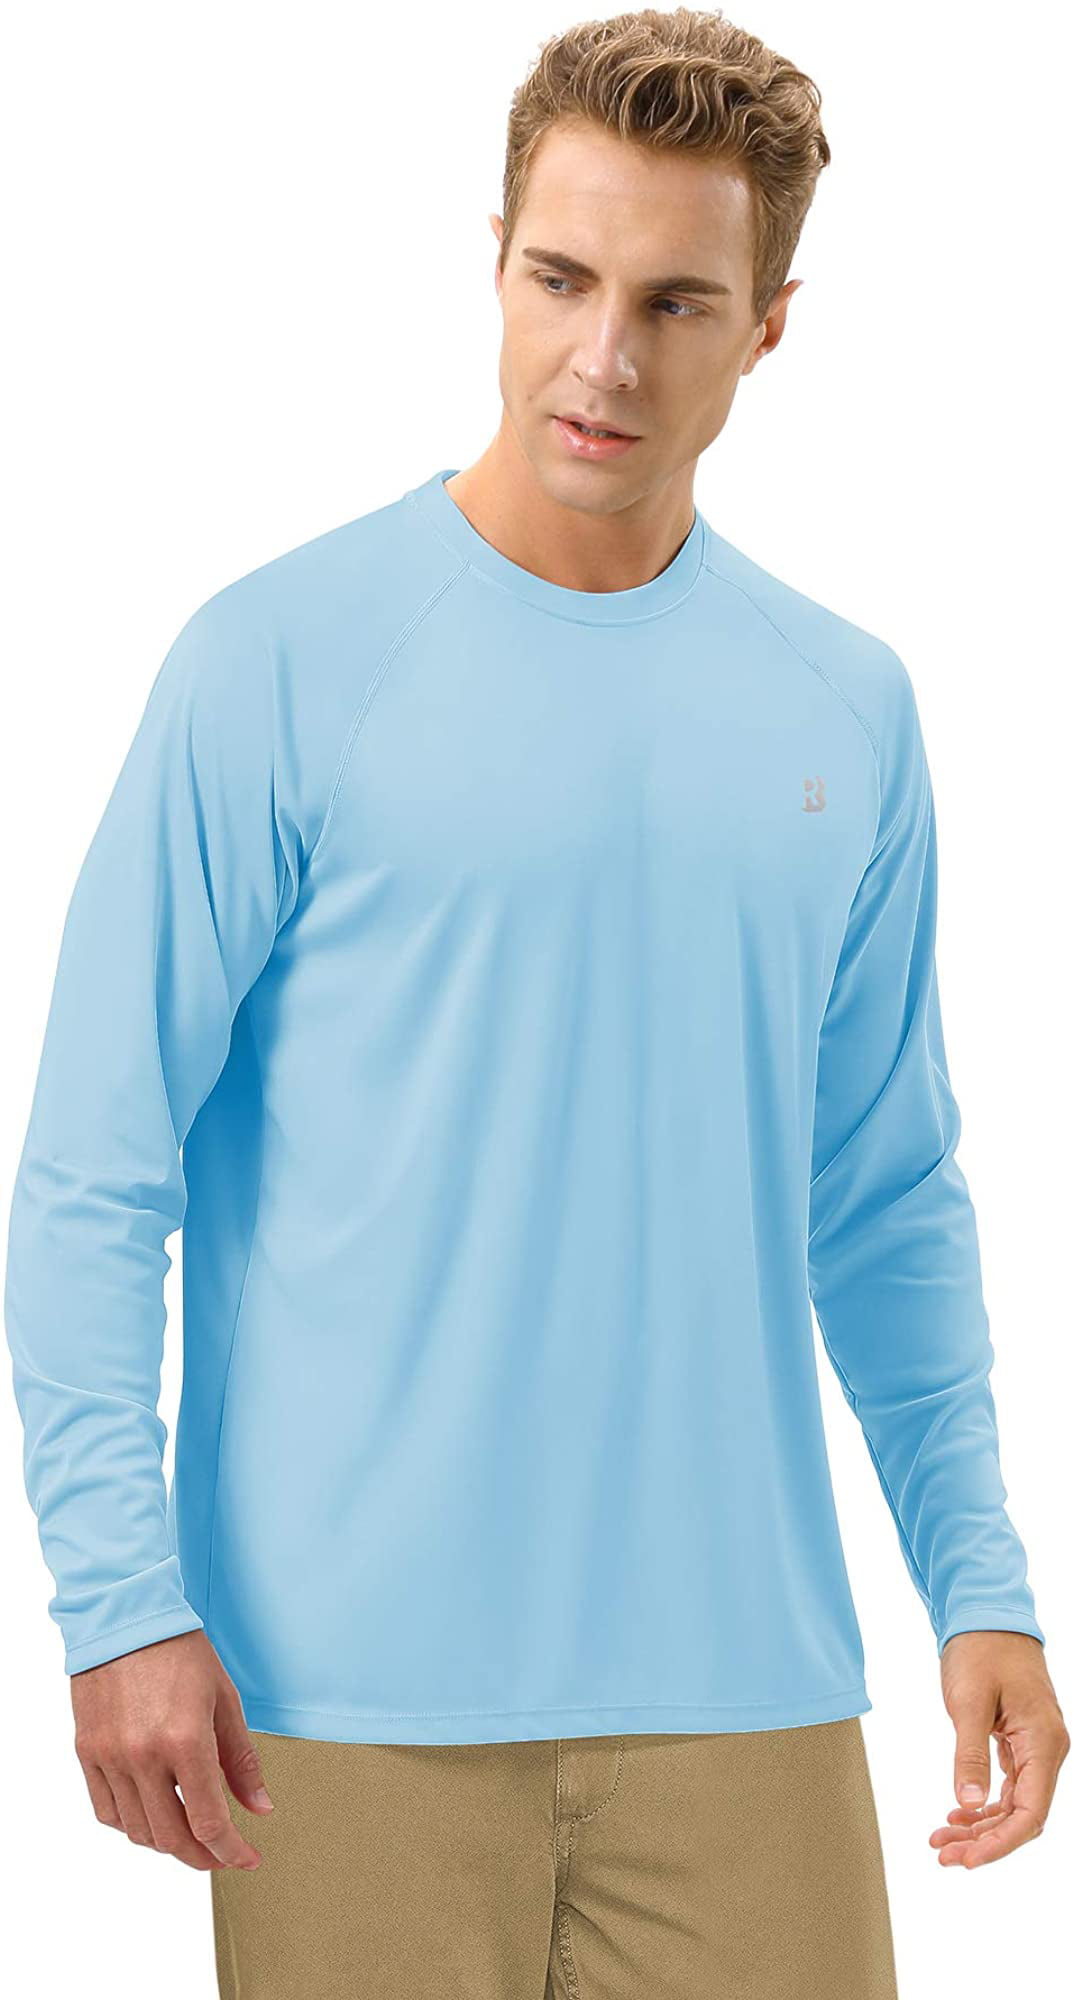 Roadbox Men's UPF 50+ UV Sun Protection Fishing Shirts Quick Dry Long  Sleeve Loose Fit Tee Tops 